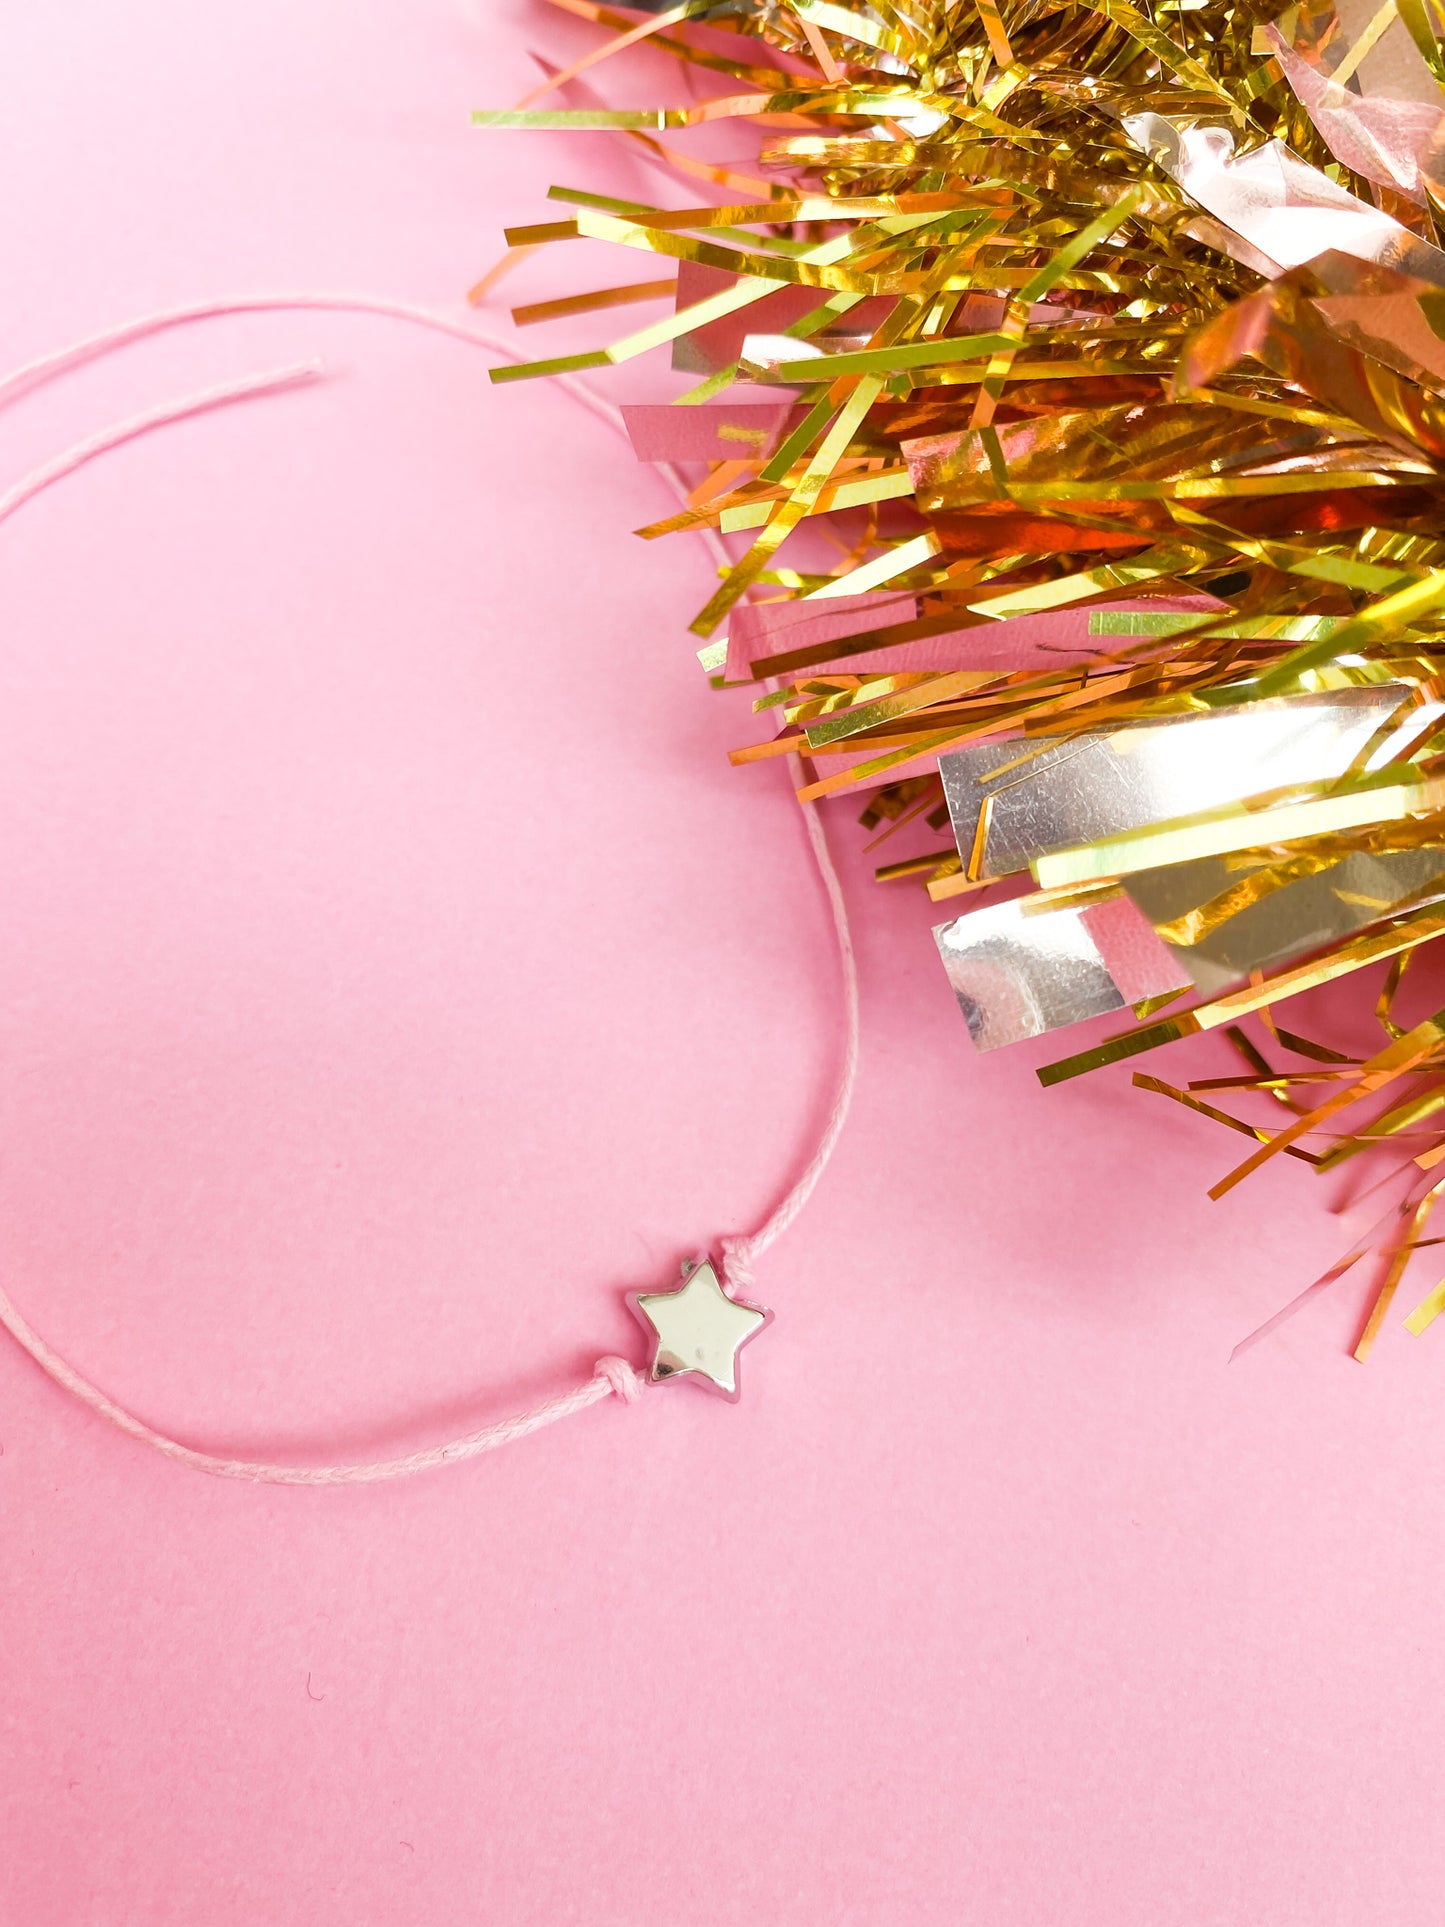 Mistletoe kisses and Christmas wishes Wish Bracelet | wish string bracelet